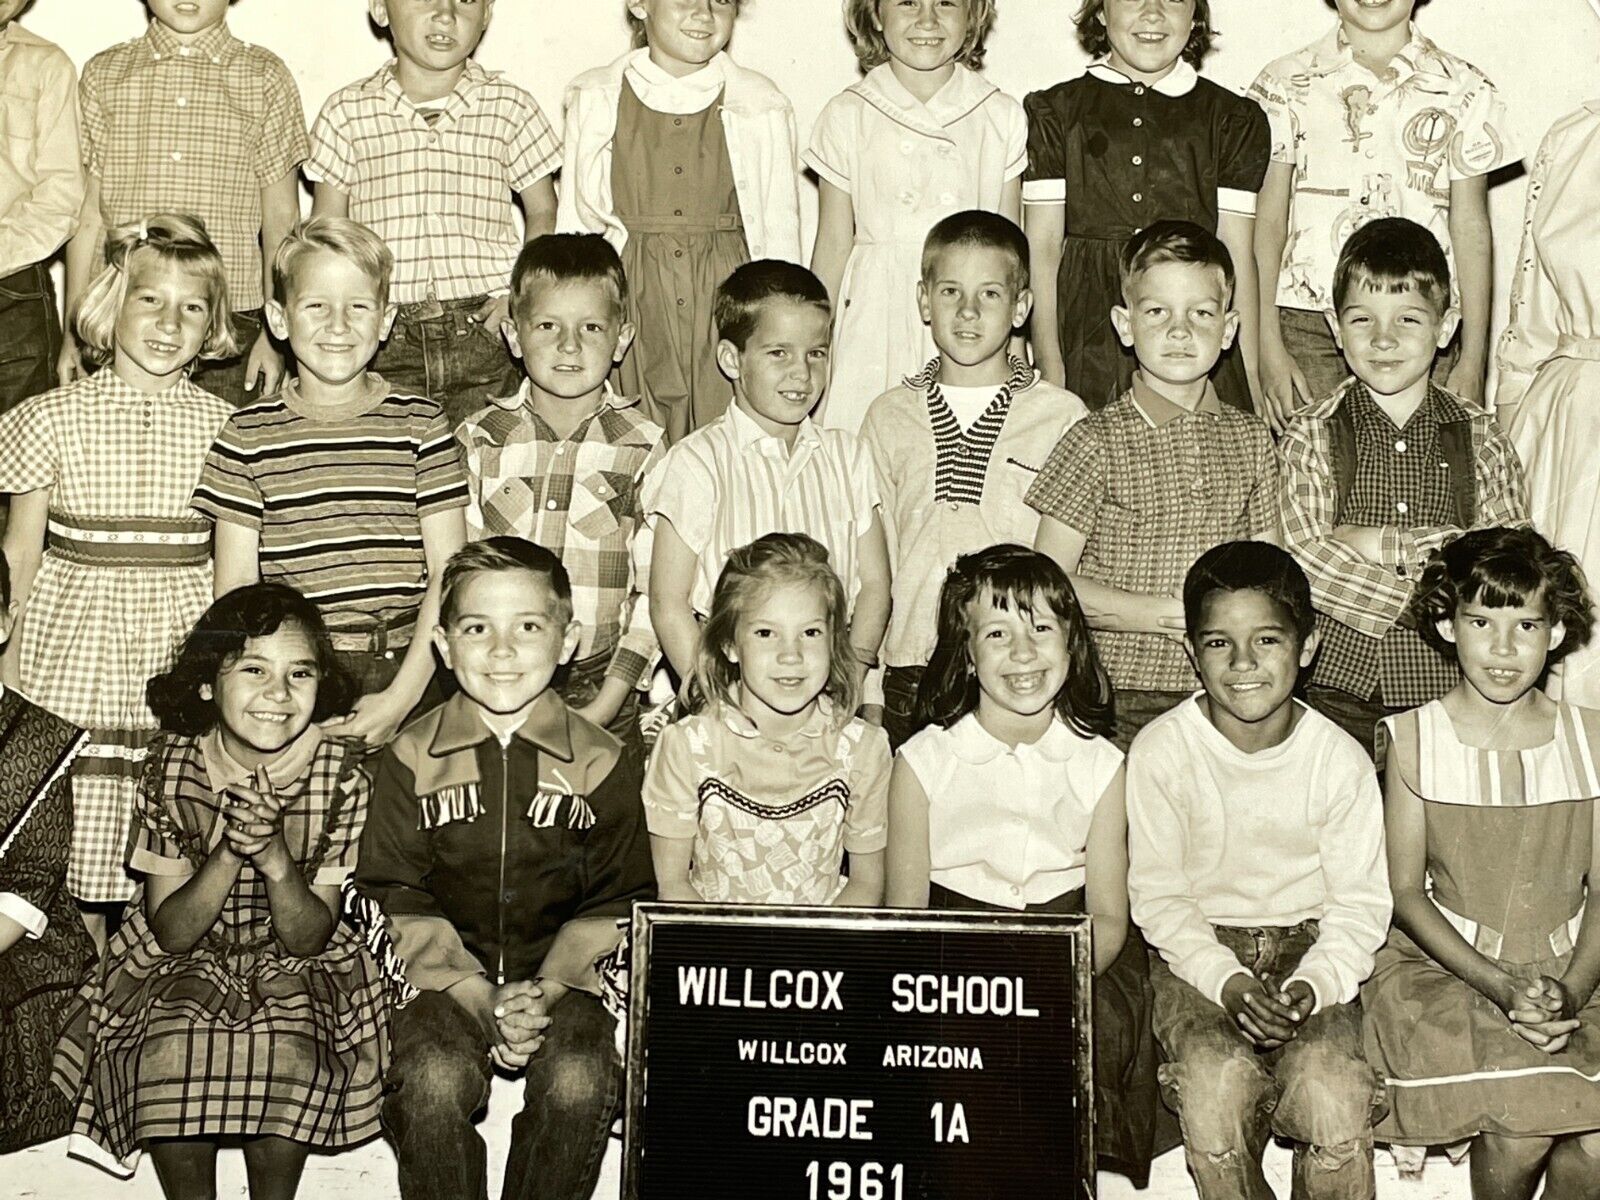 BV Photograph Kids Willcox Jr High School Class Photo 1961 Arizona Faculty 